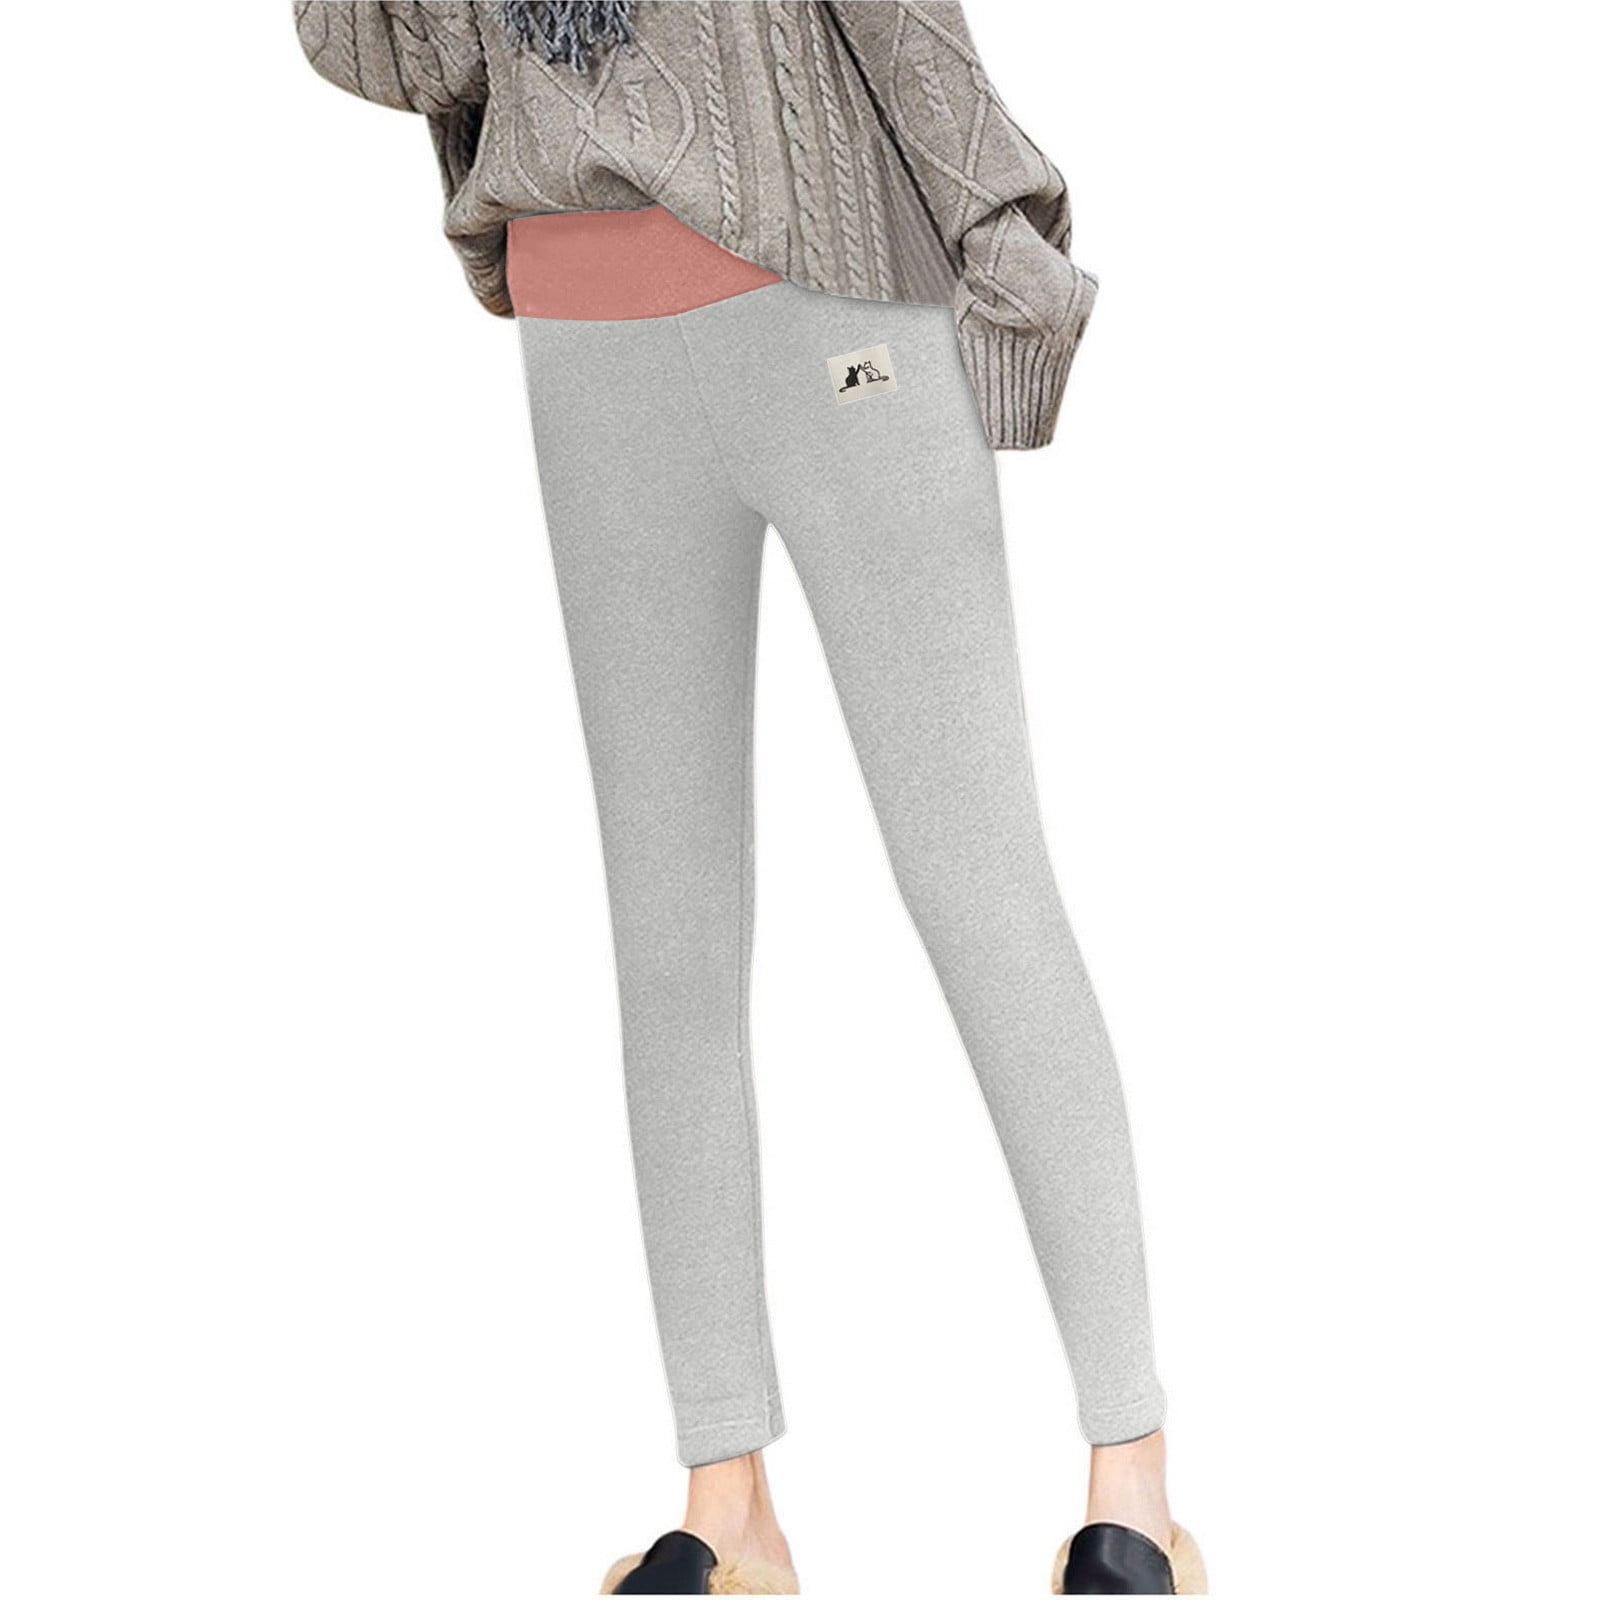 Women's leggings butter soft cotton stretchy polyester spandex design  unicorn en